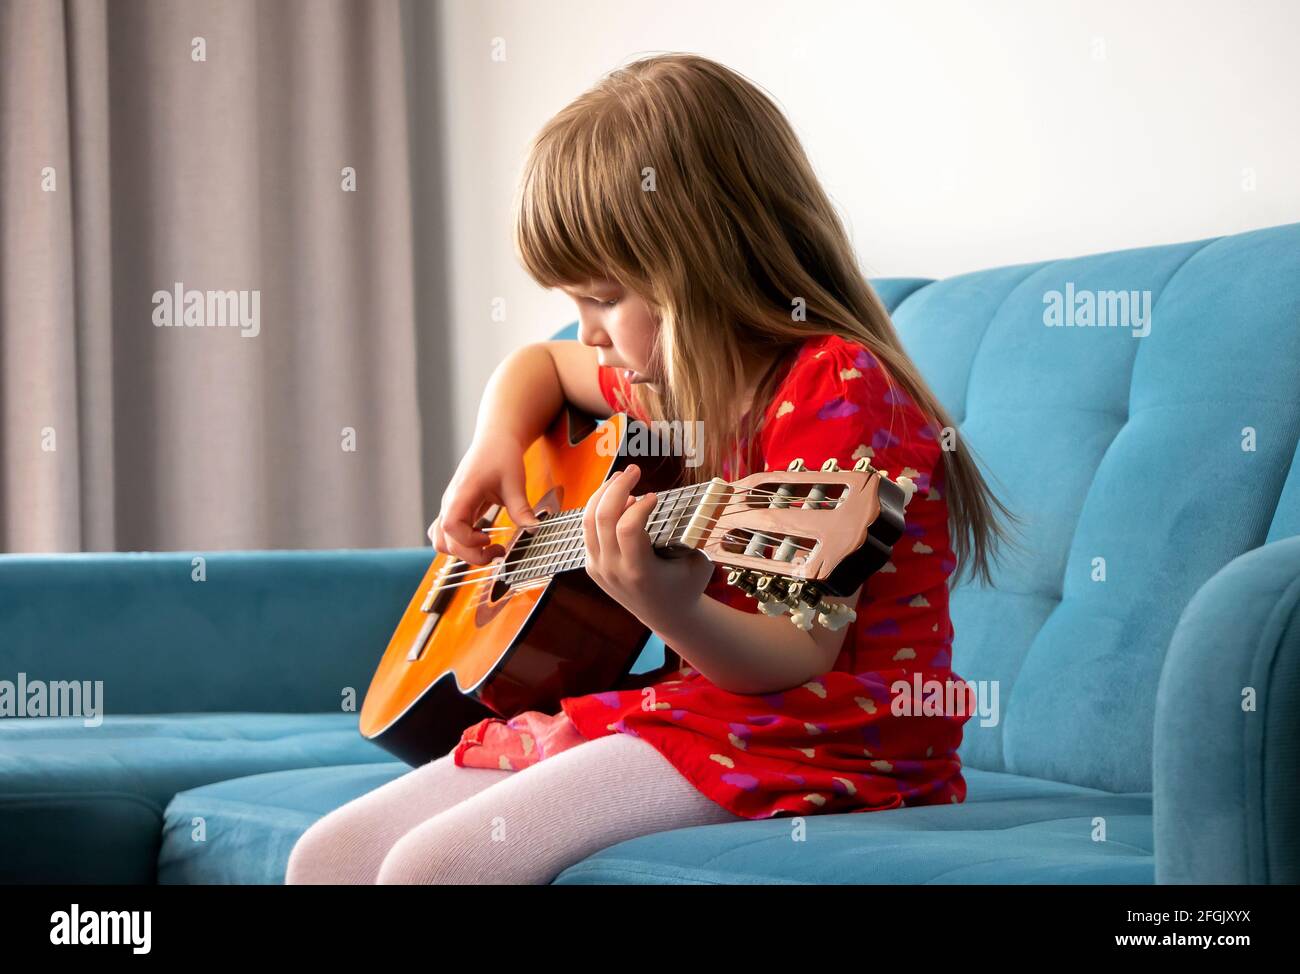 Niña pequeña, joven en edad escolar niño tocando una guitarra acústica,  practicando un instrumento musical sentado en un sofá en casa, interior,  vista lateral. Música Fotografía de stock - Alamy